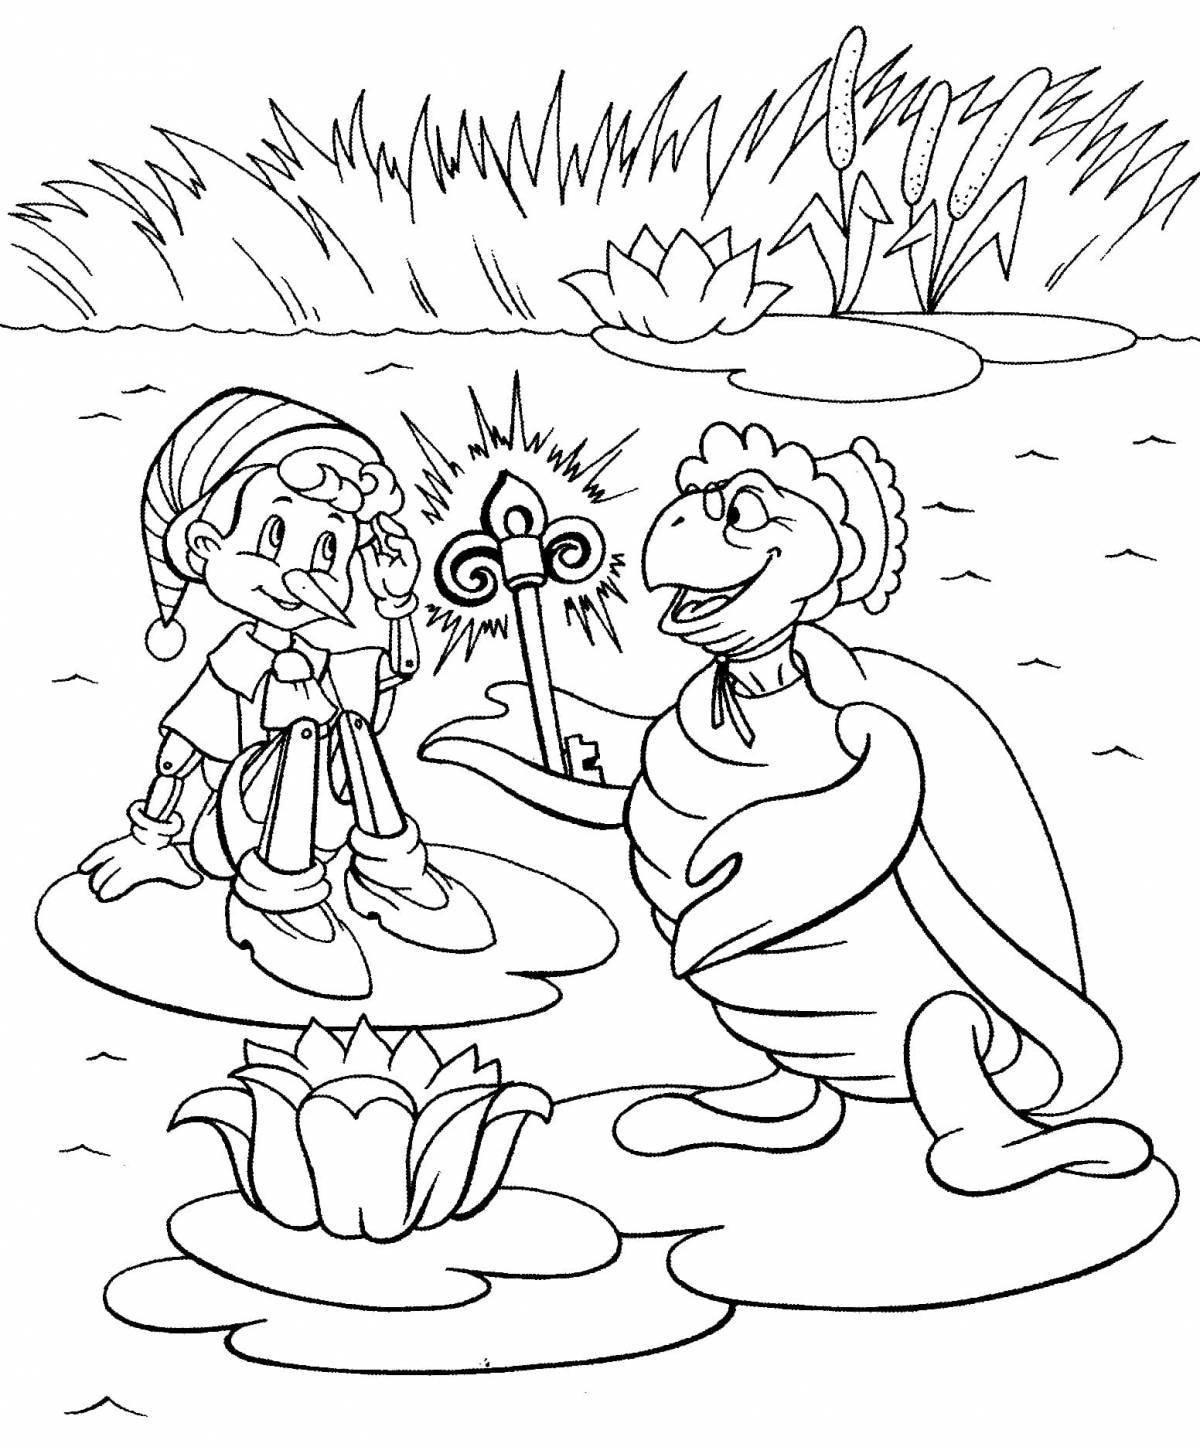 Fun Pinocchio coloring book for kids